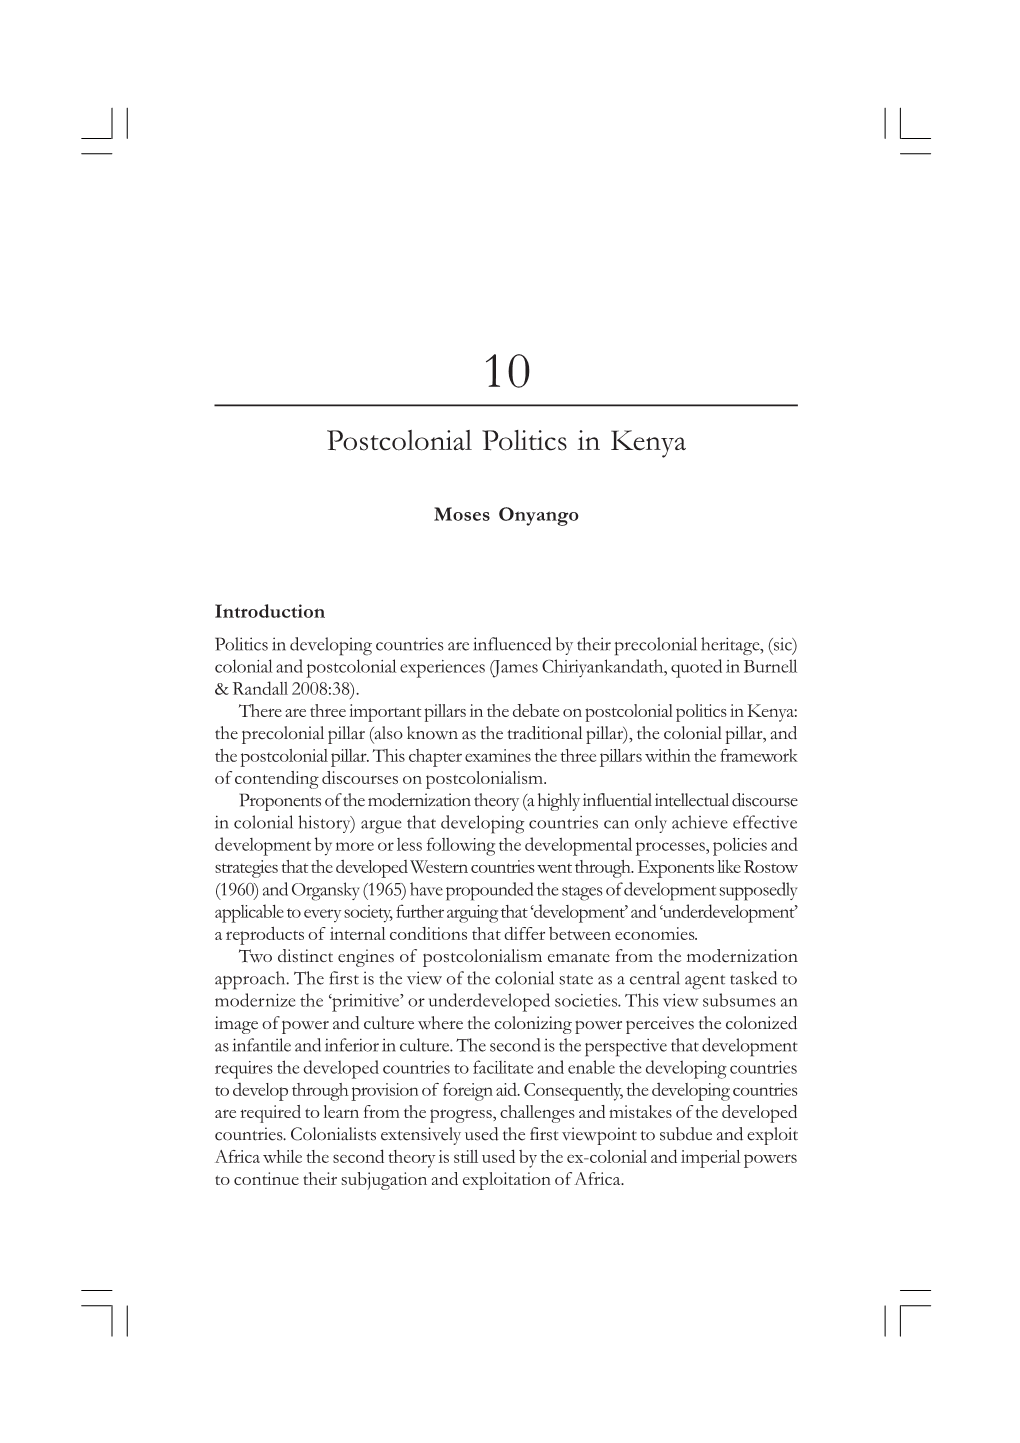 Postcolonial Politics in Kenya